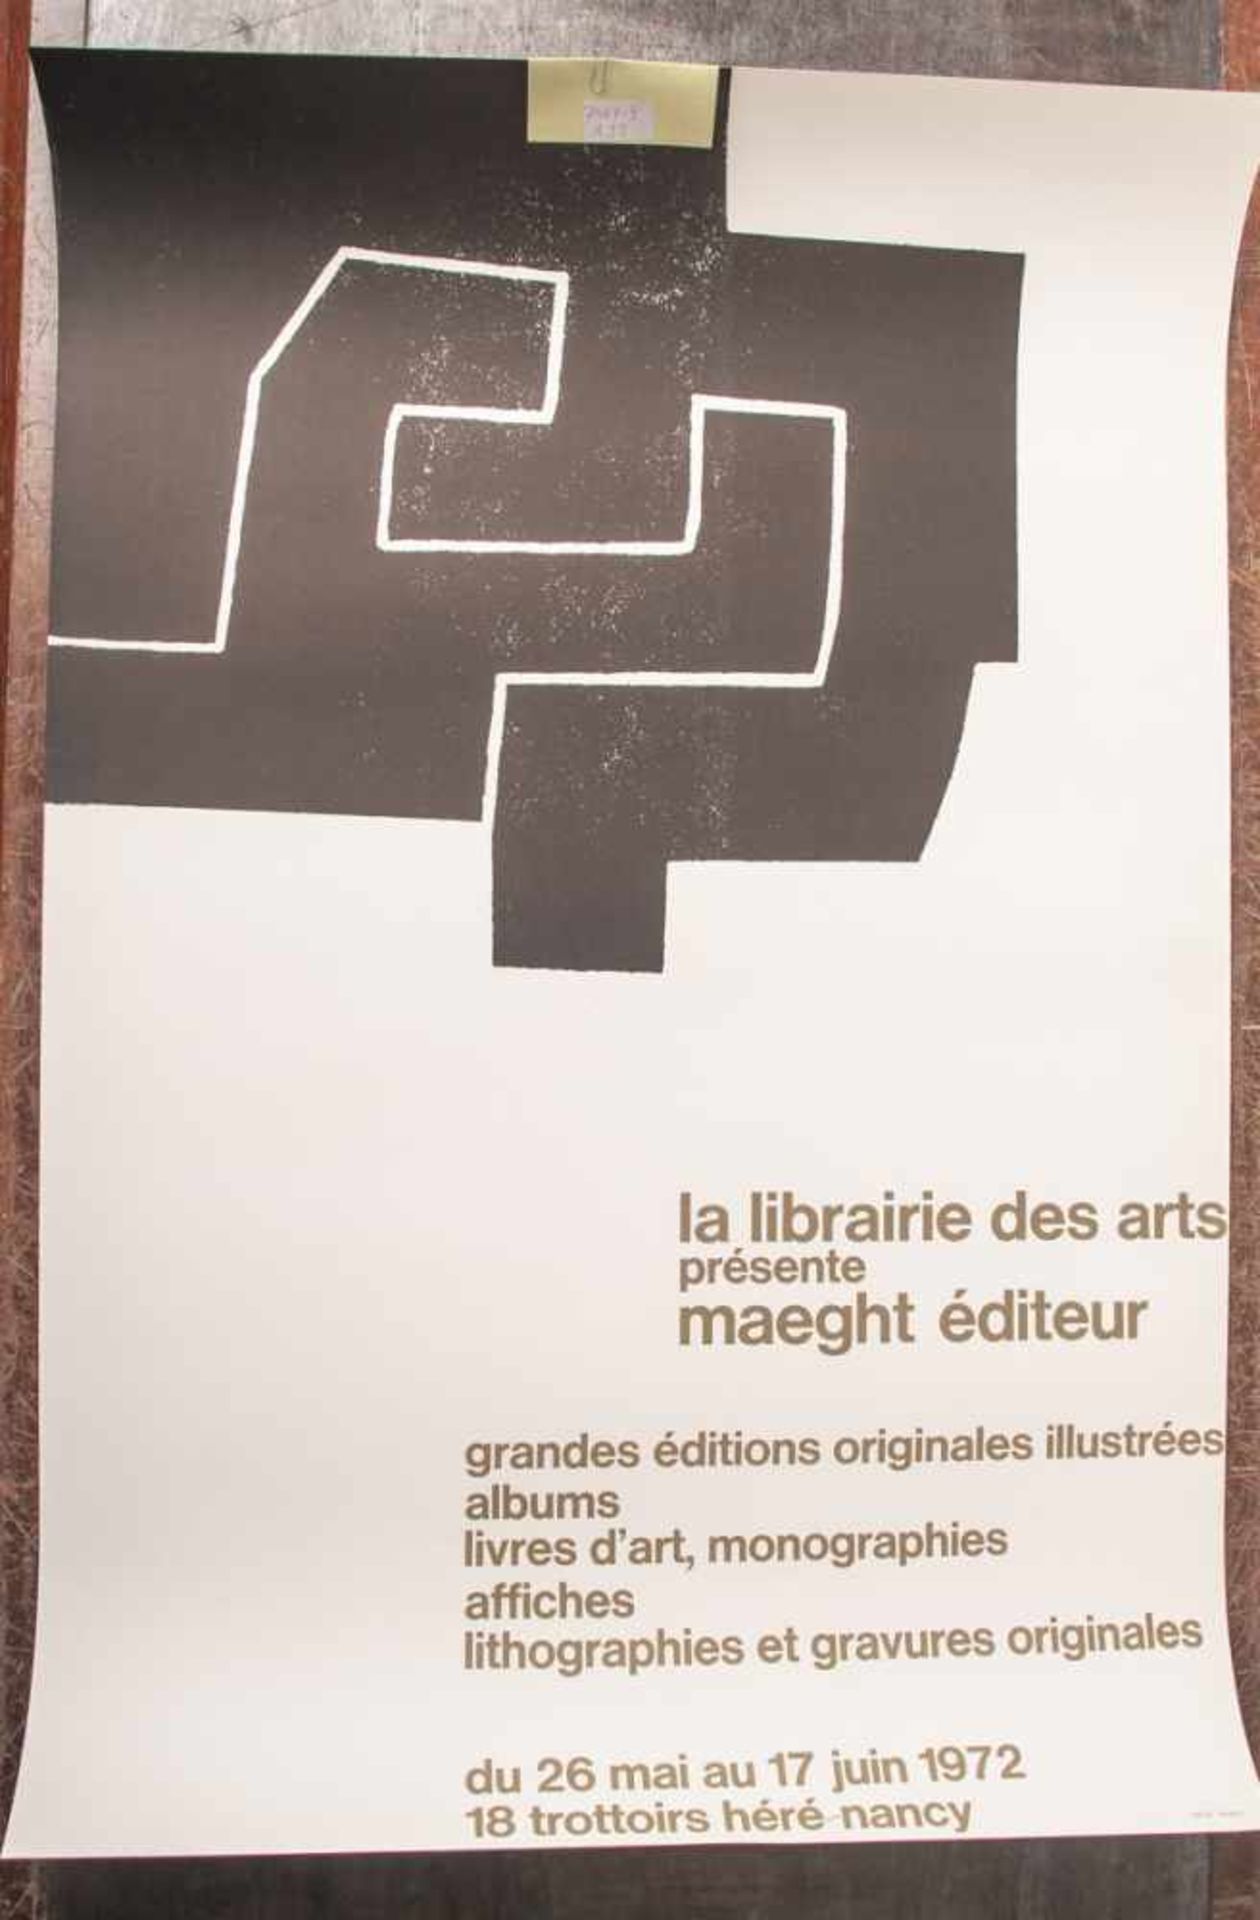 Chillida, Eduardo (1924-2002), Veranstaltungsplakat "la librairie des arts présente